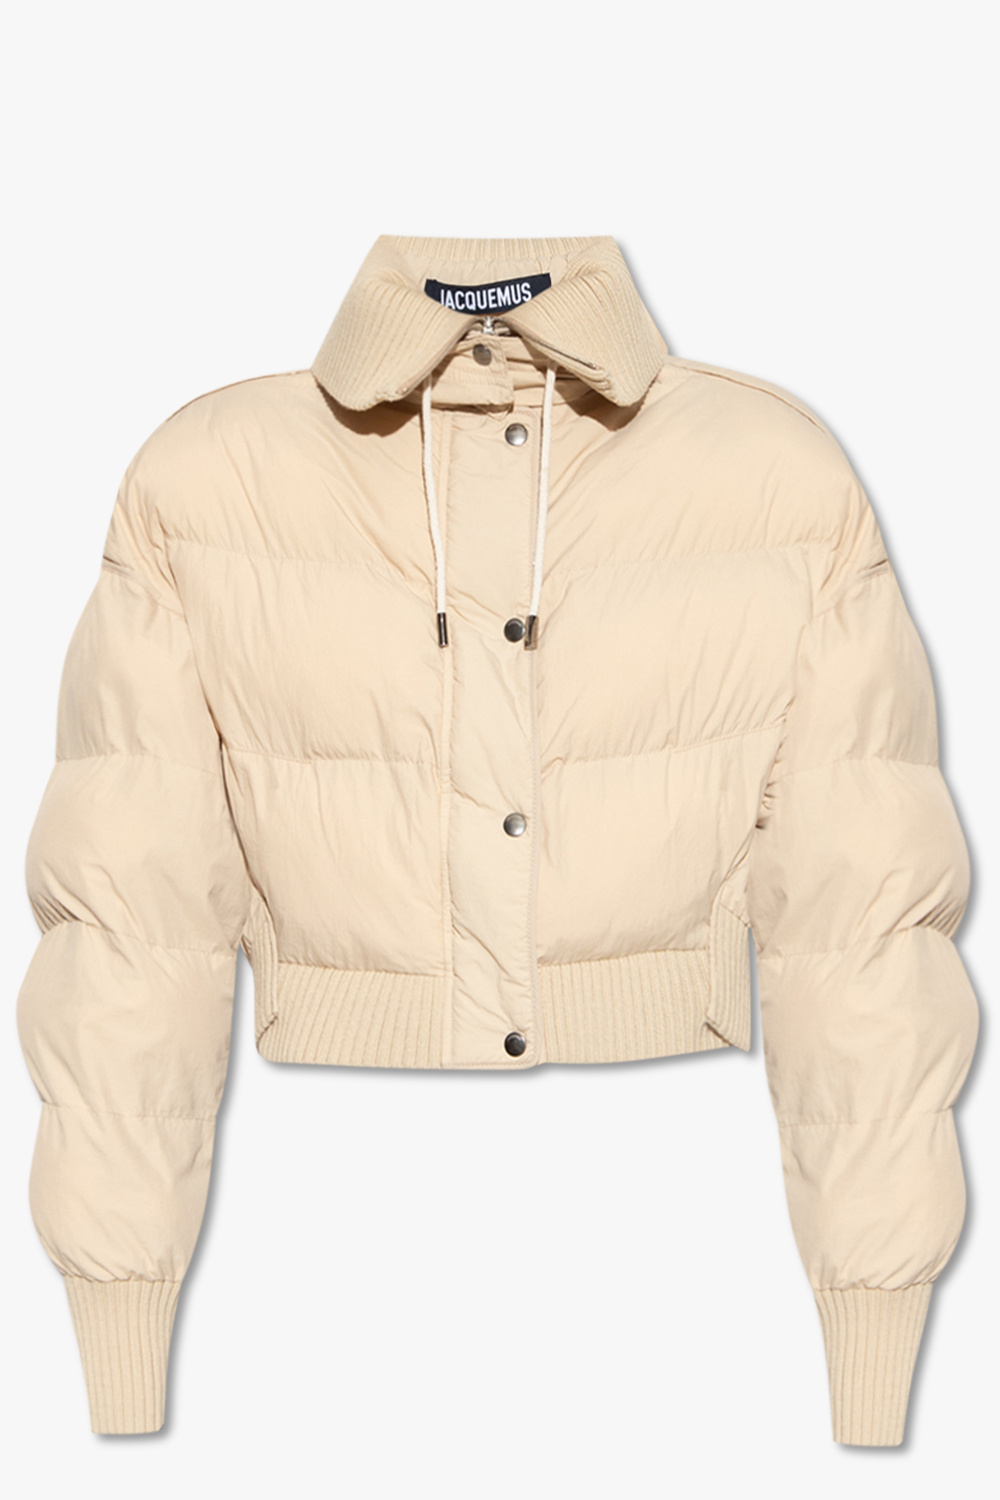 Jacquemus ‘Briciola’ short jacket